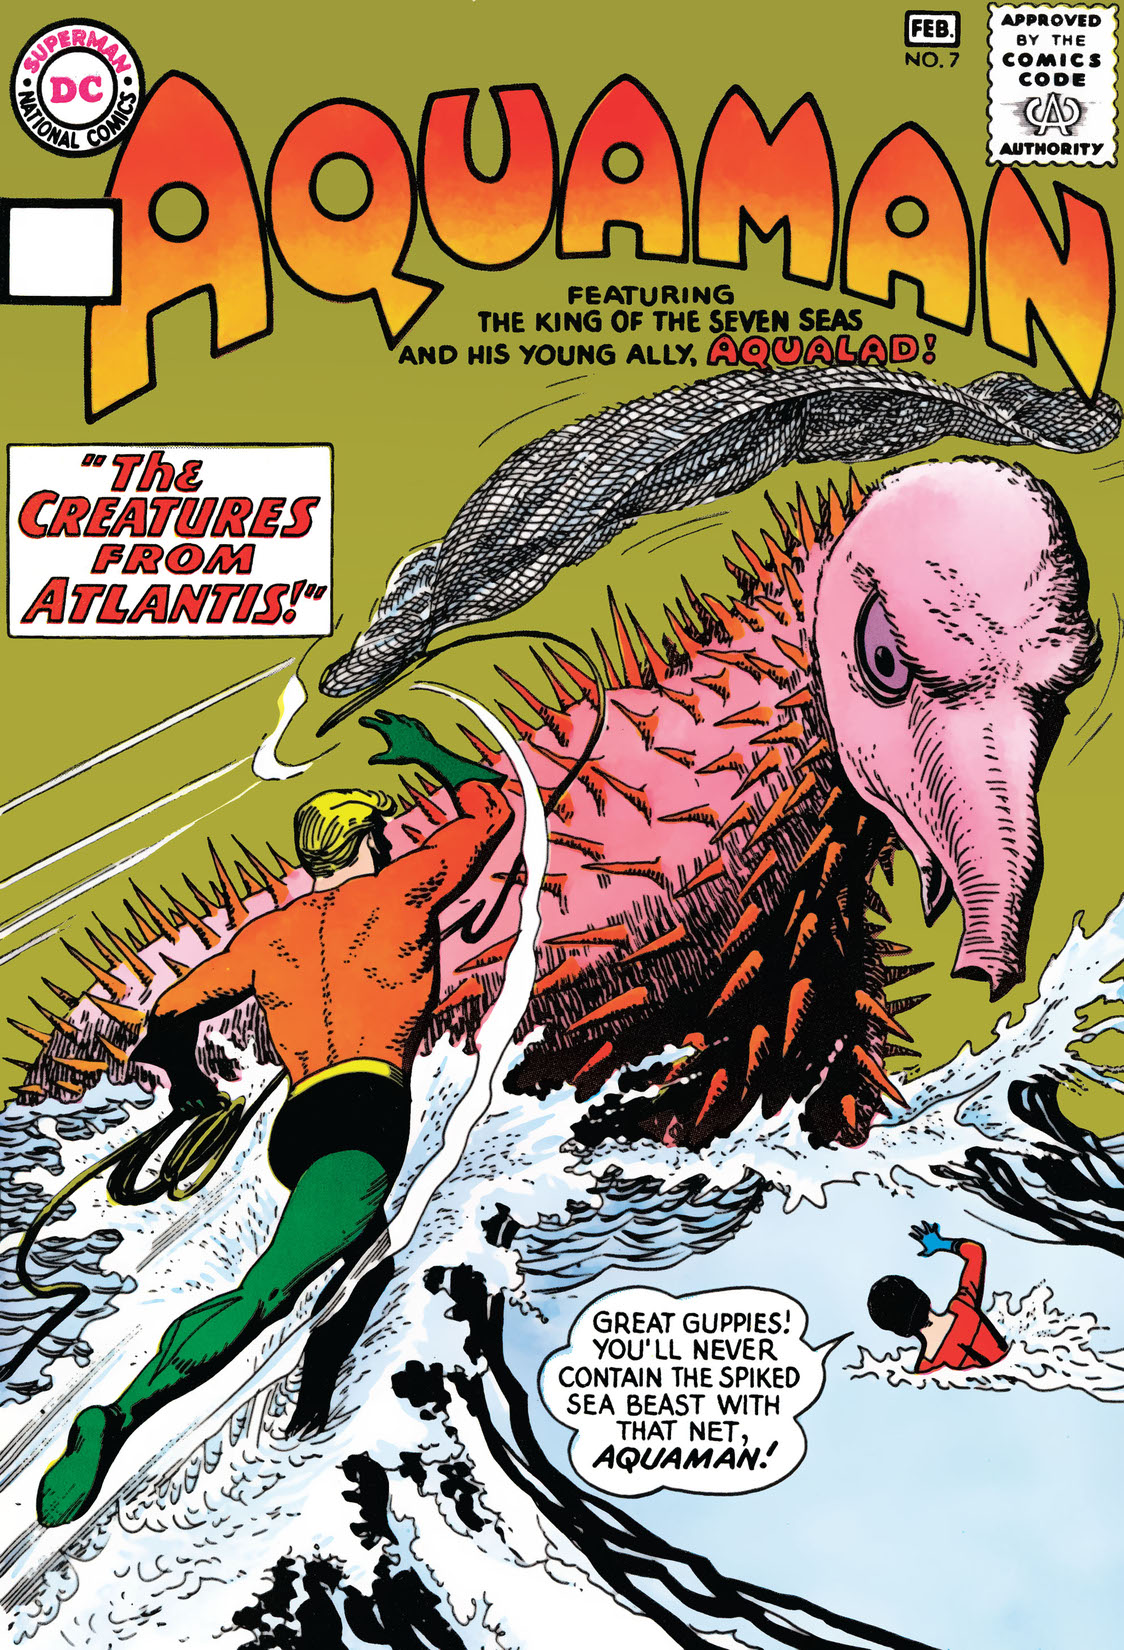 Aquaman (1962-) #7 preview images